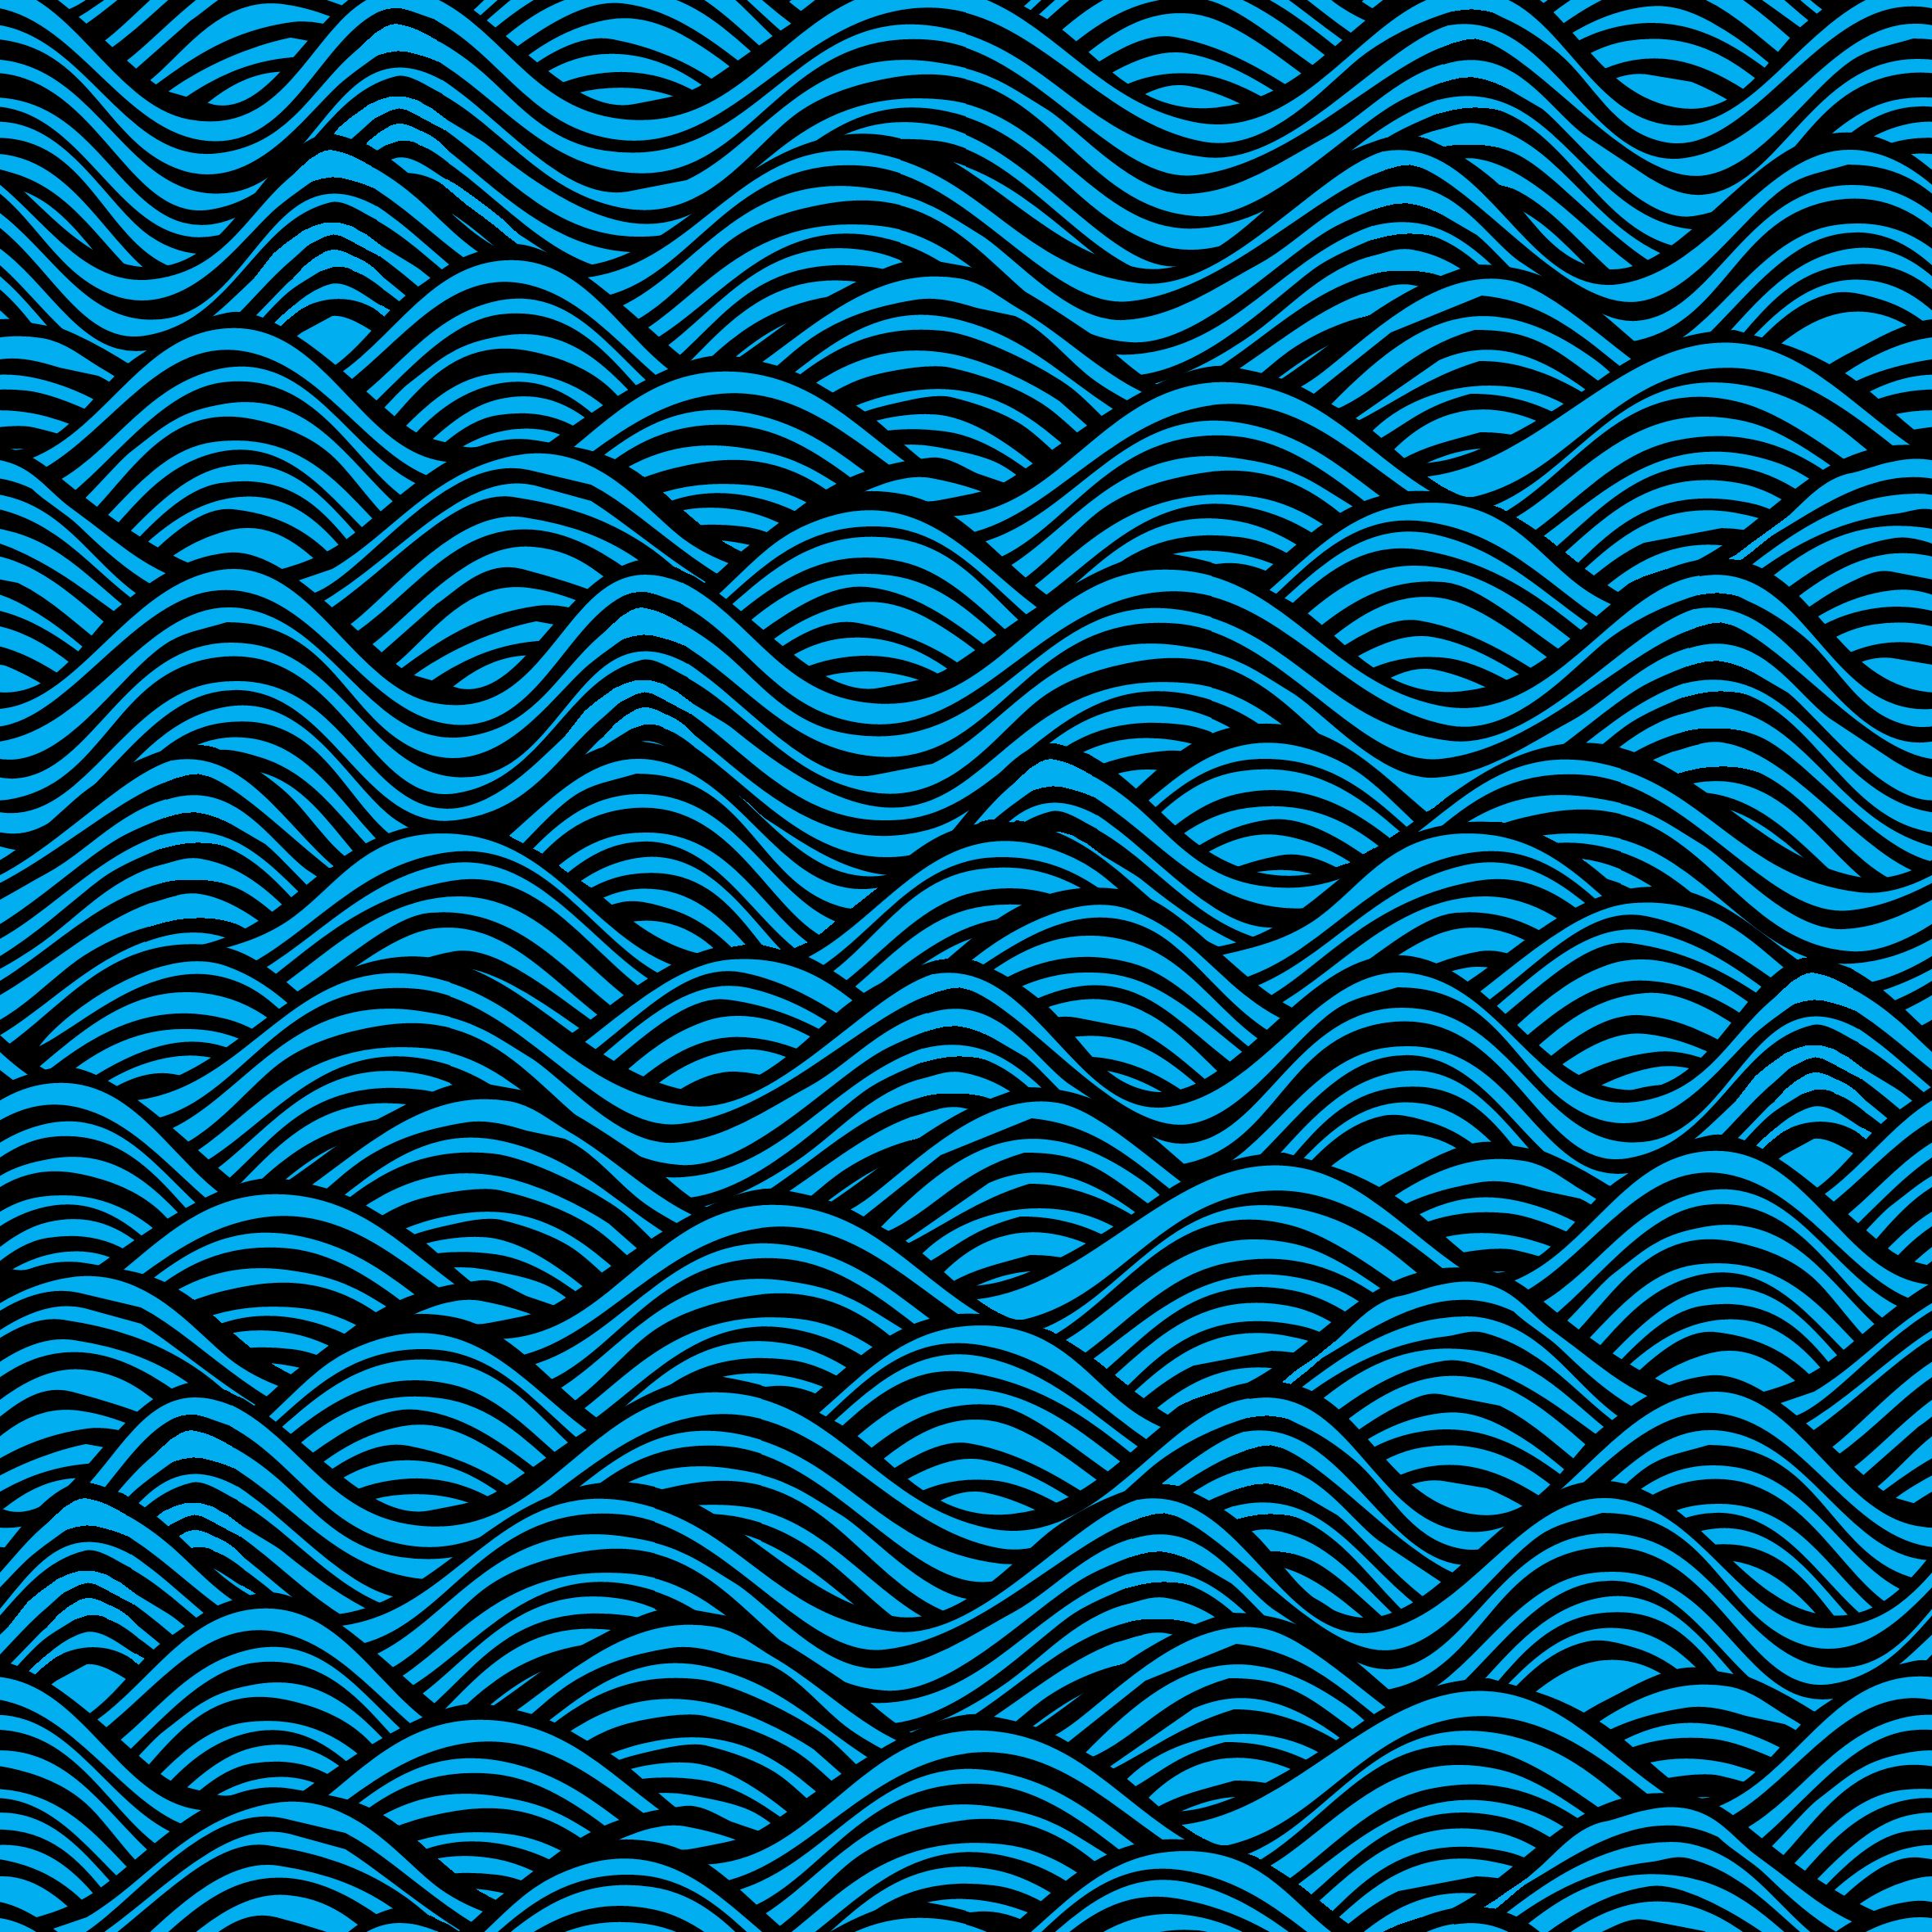 water pattern photoshop free download